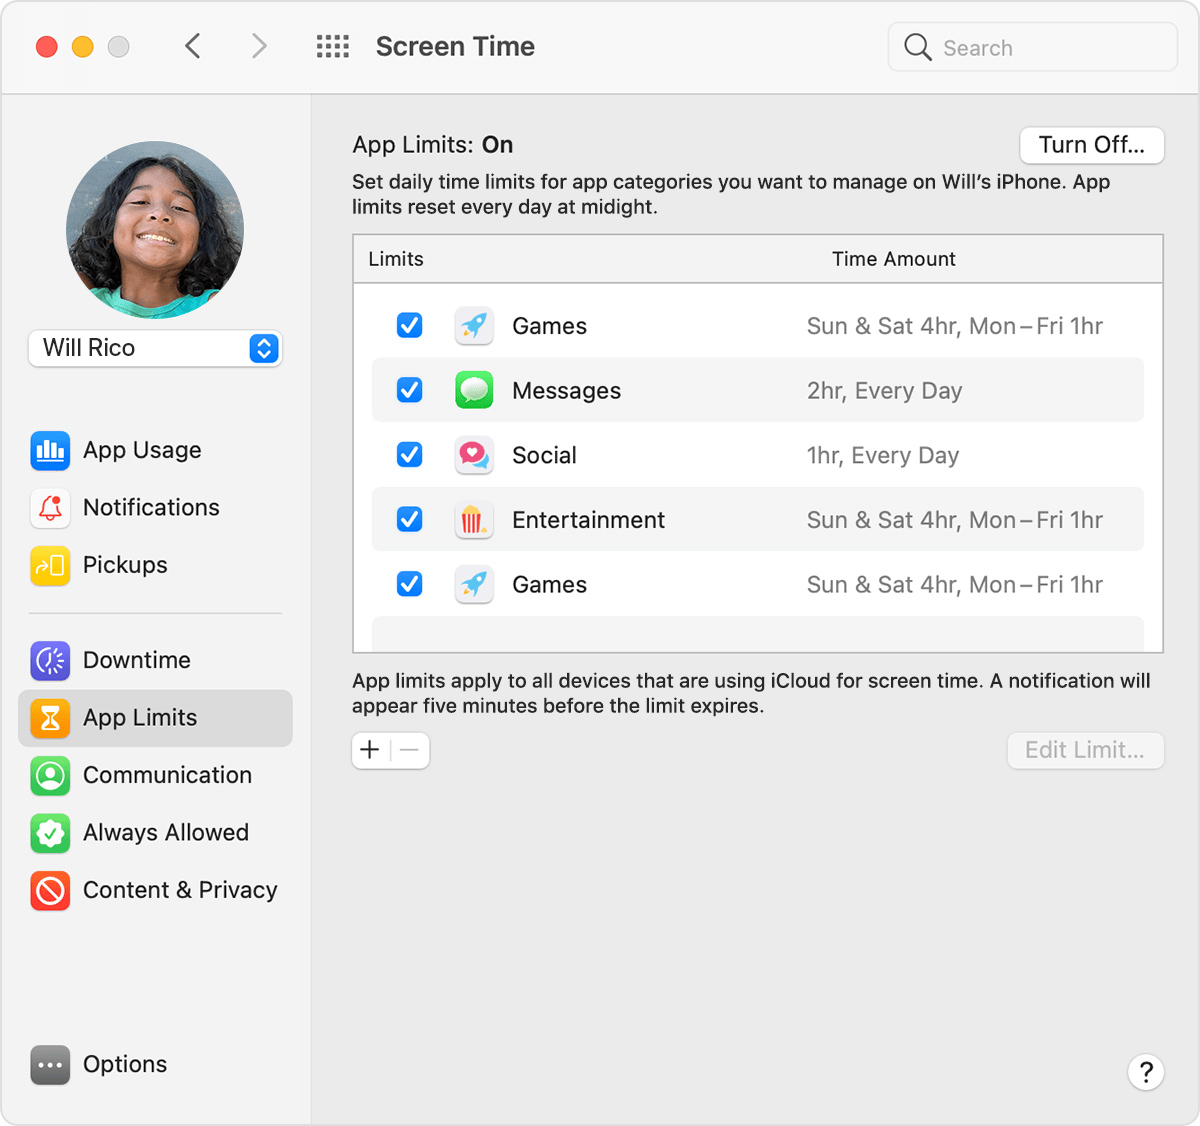 Screen Time preferences: App Limits